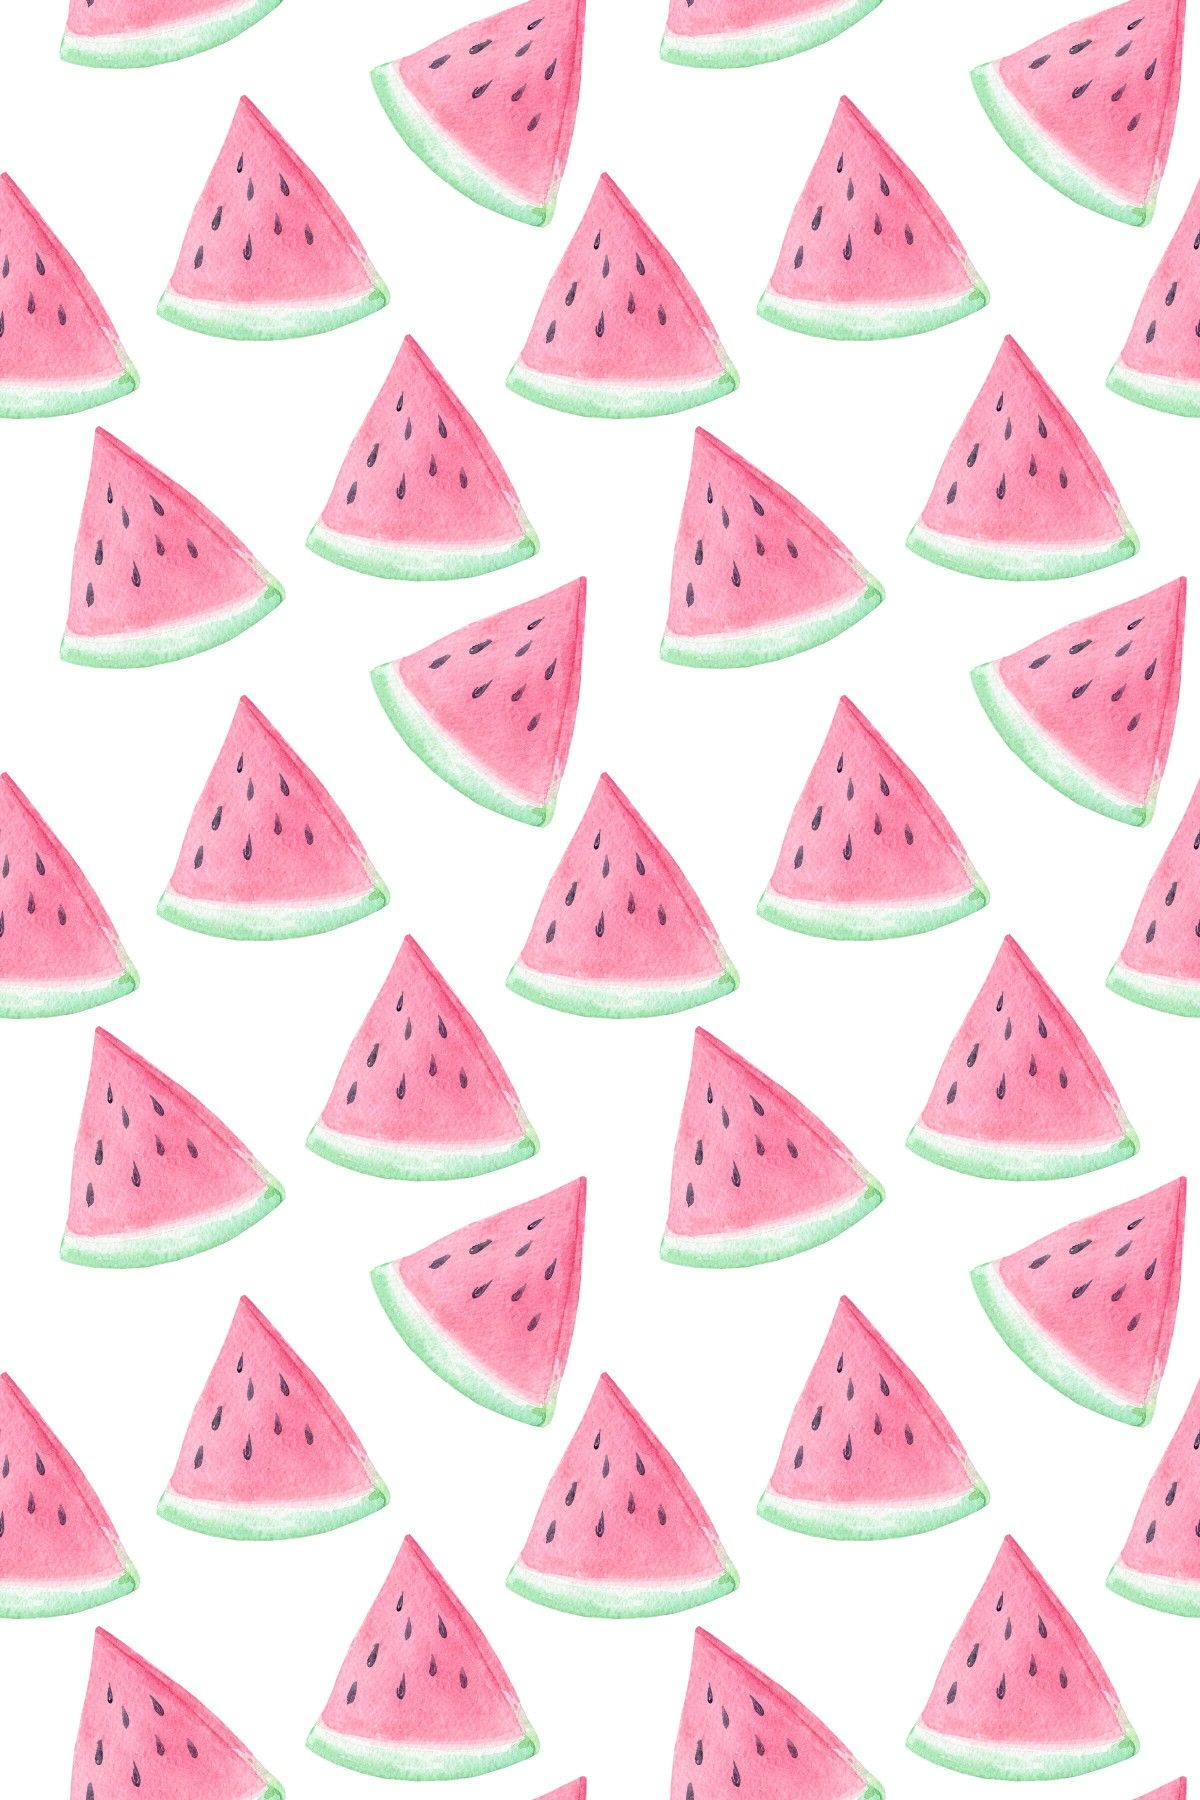 watermelon pattern paper. Watermelon wallpaper, Cute patterns wallpaper, Watermelon background